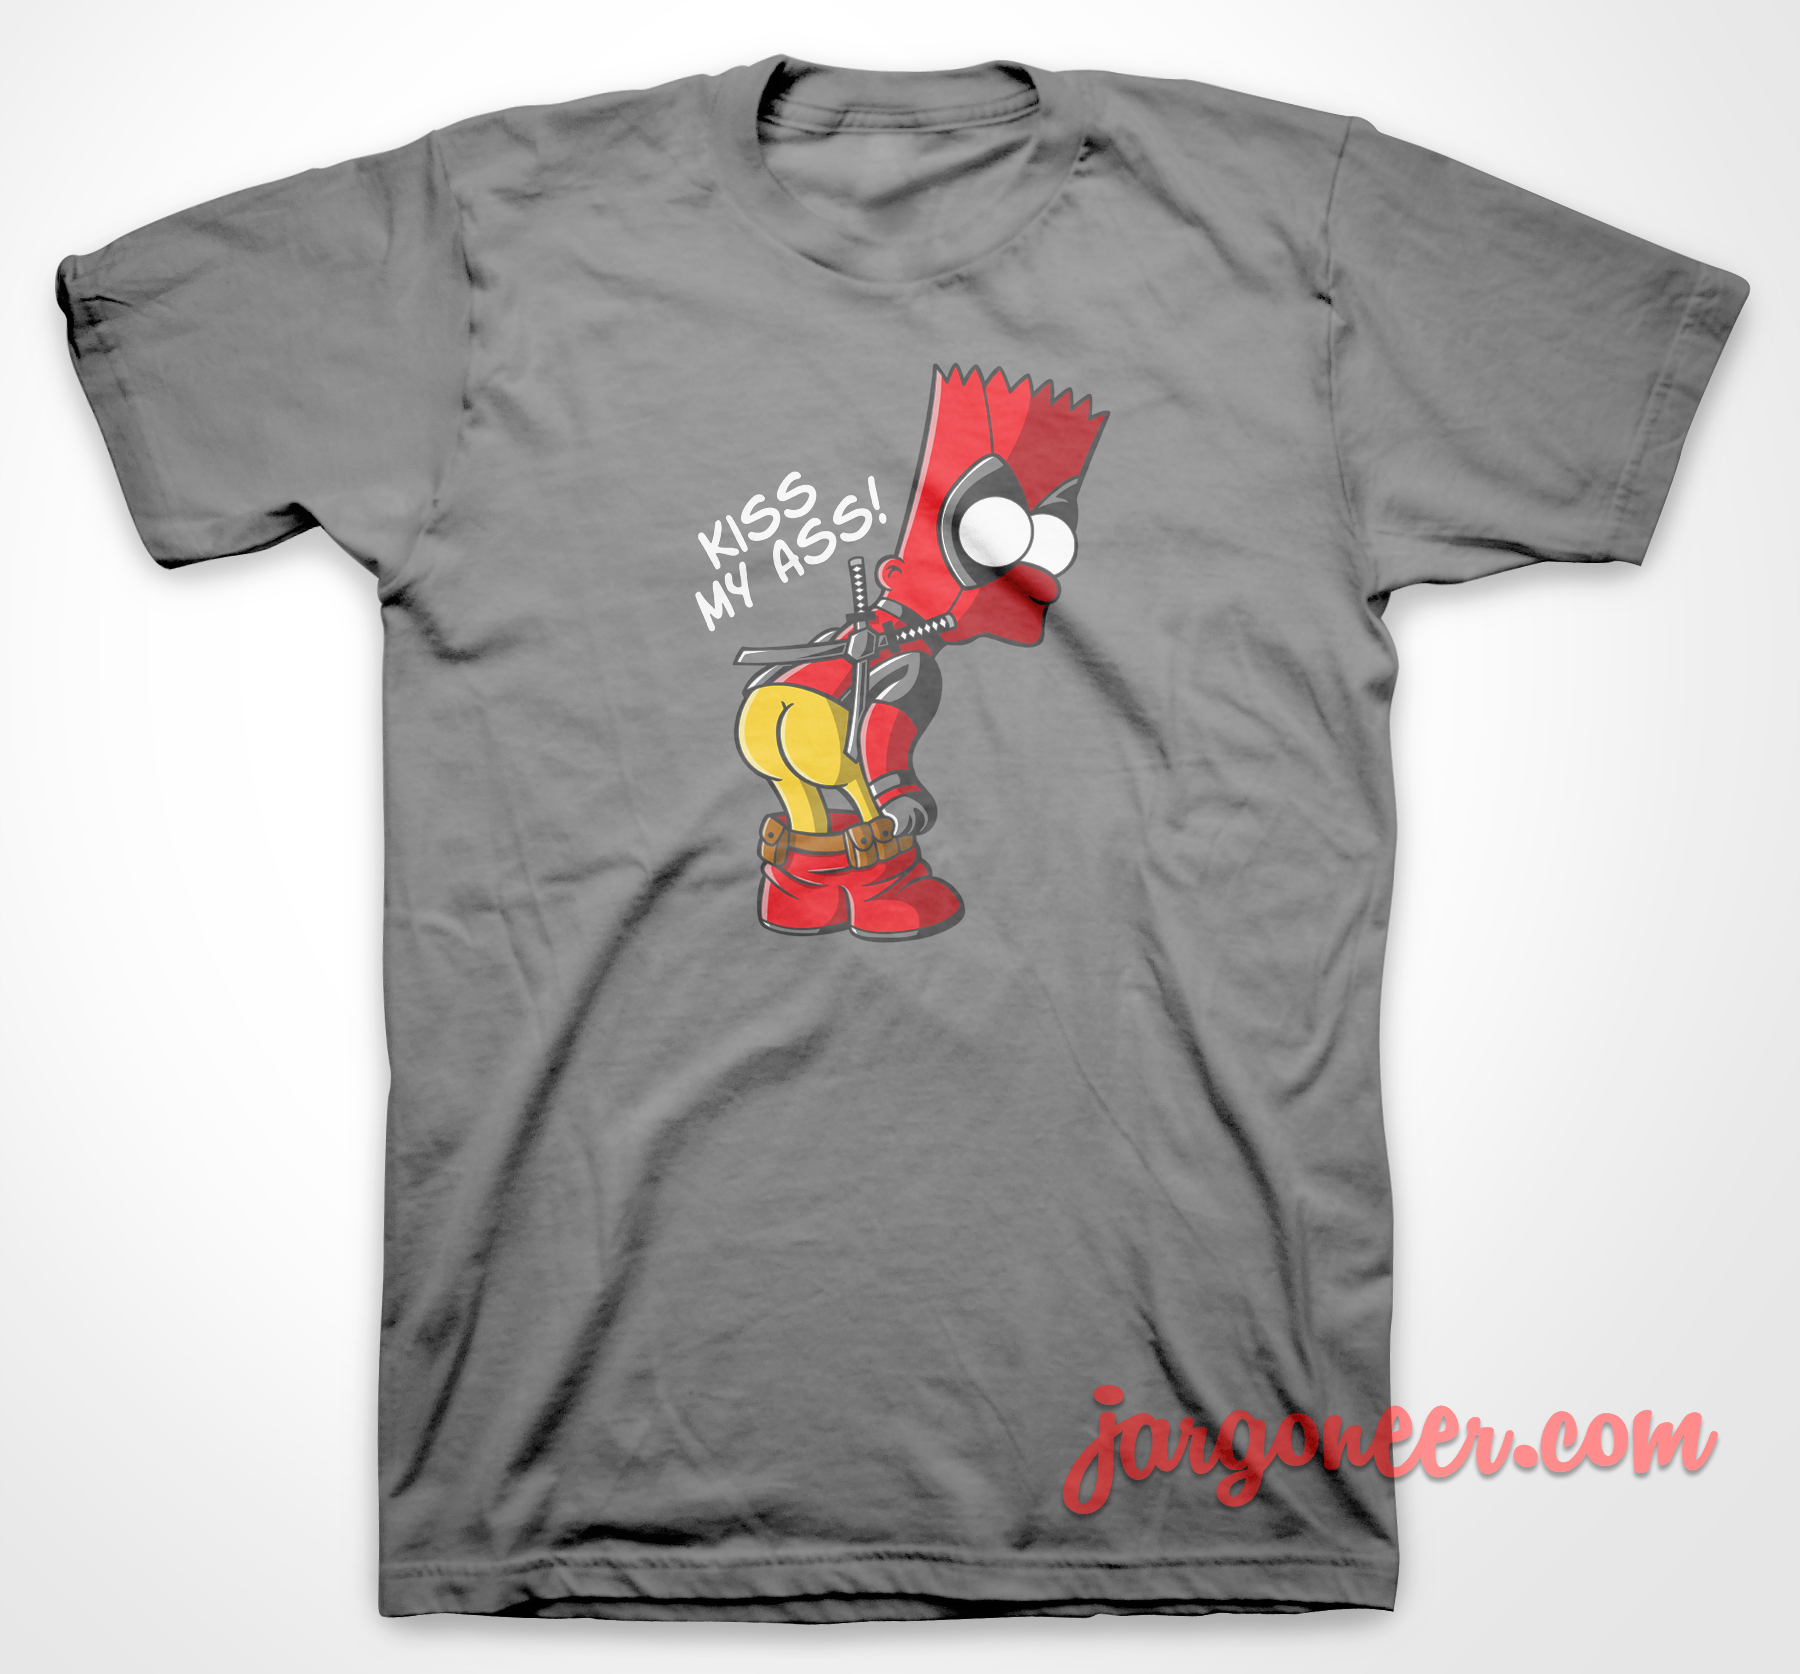 Bartpool Kiss My Ass - Shop Unique Graphic Cool Shirt Designs